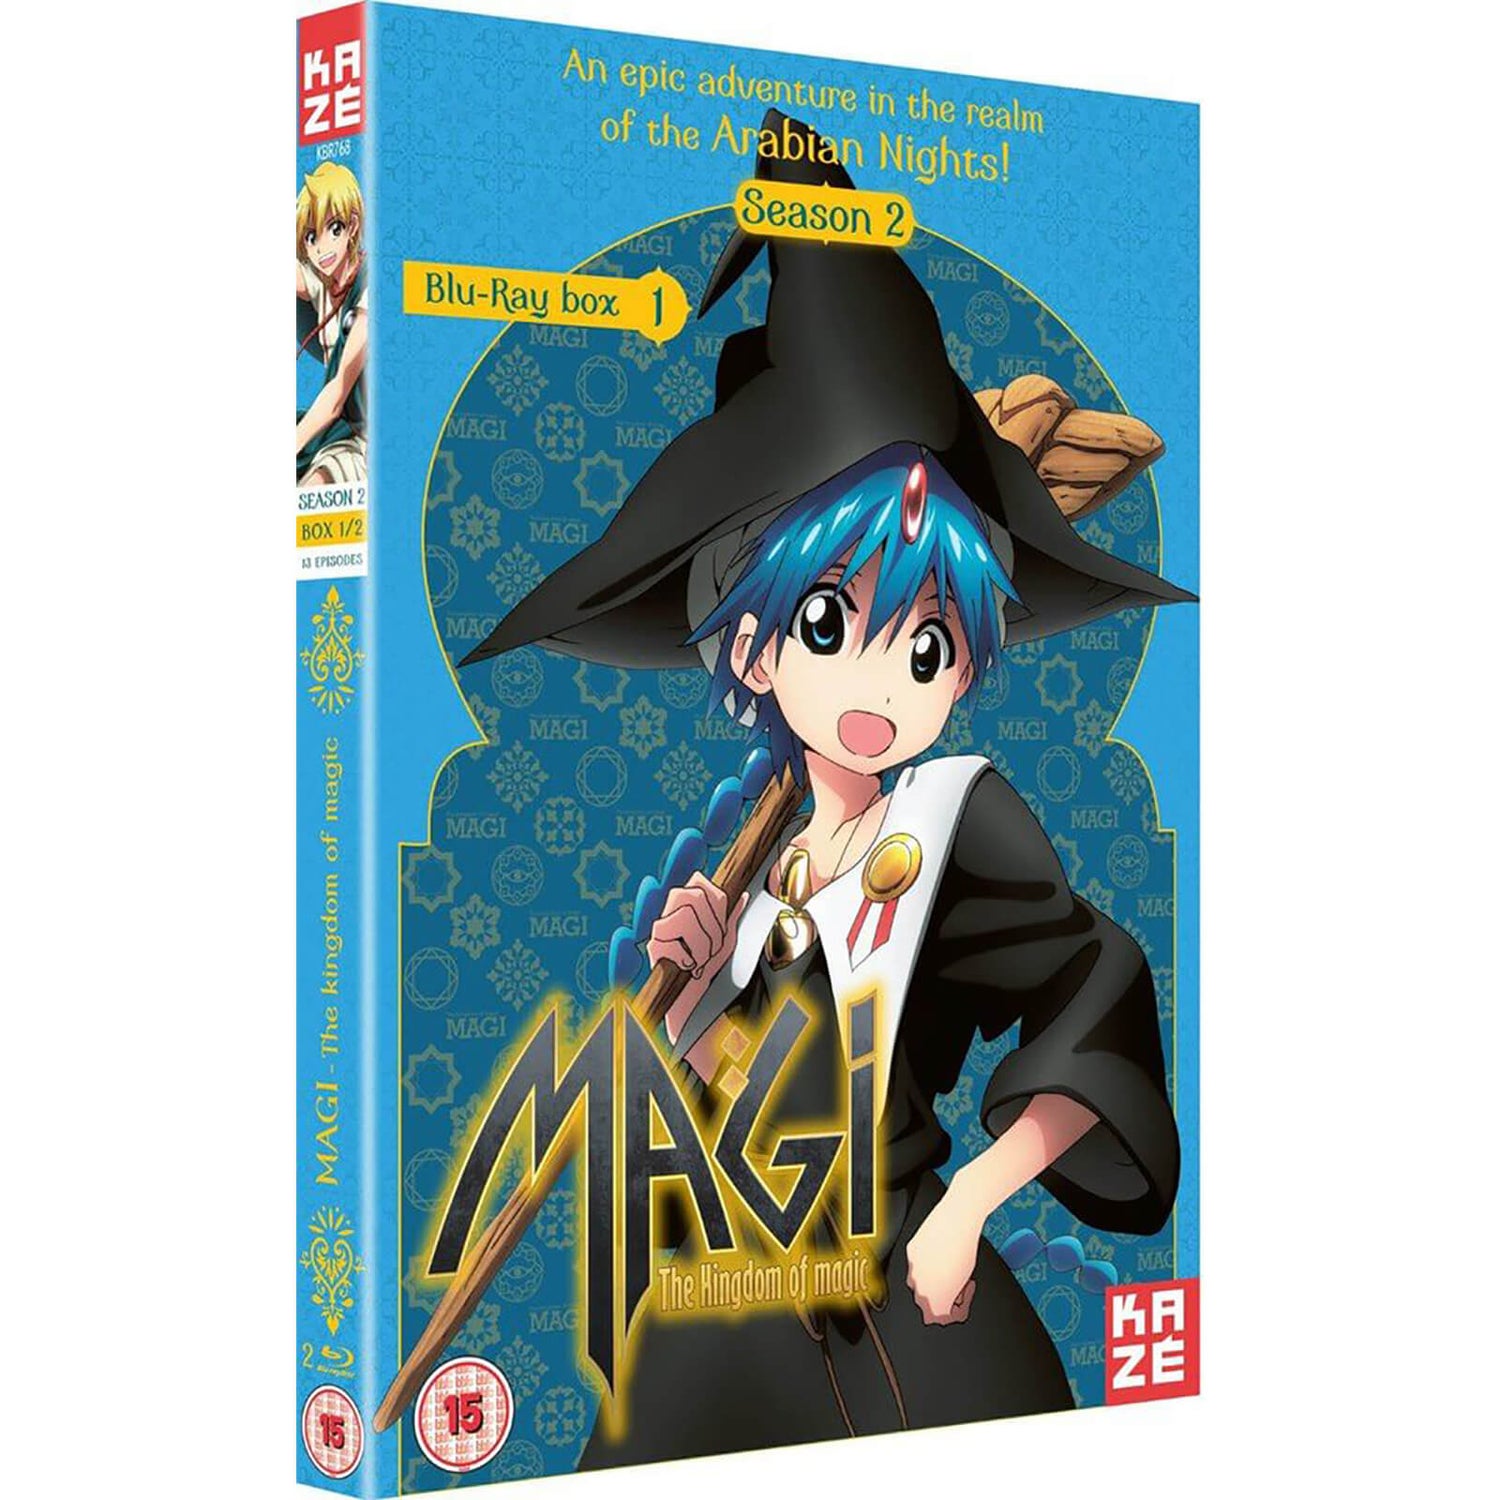 Magi The Kingdom of Magic - Season 2 Part 2 Blu-ray - Zavvi UK